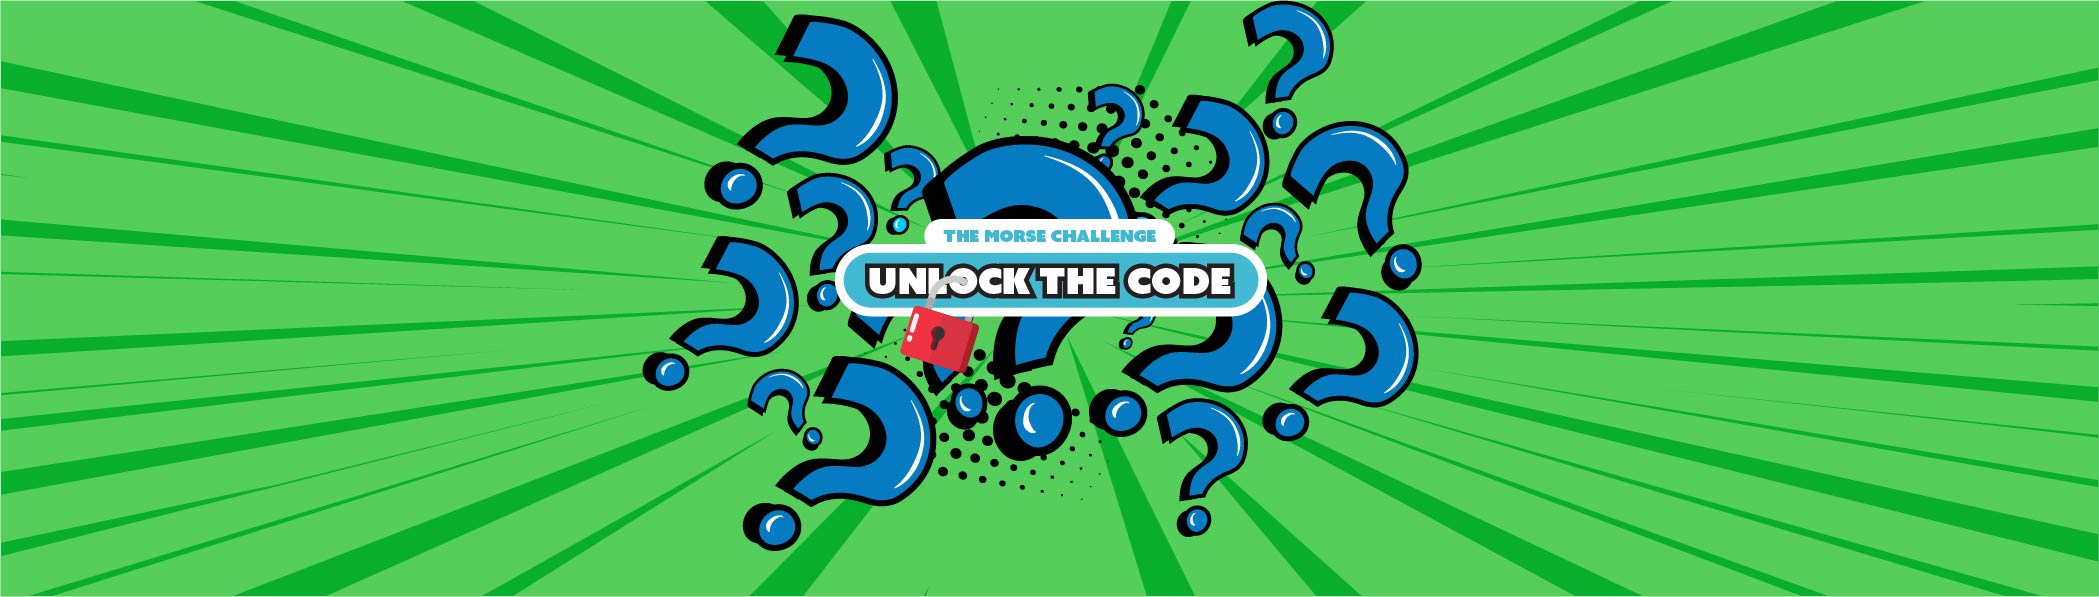 The MORSE Challenge Unlock the Code